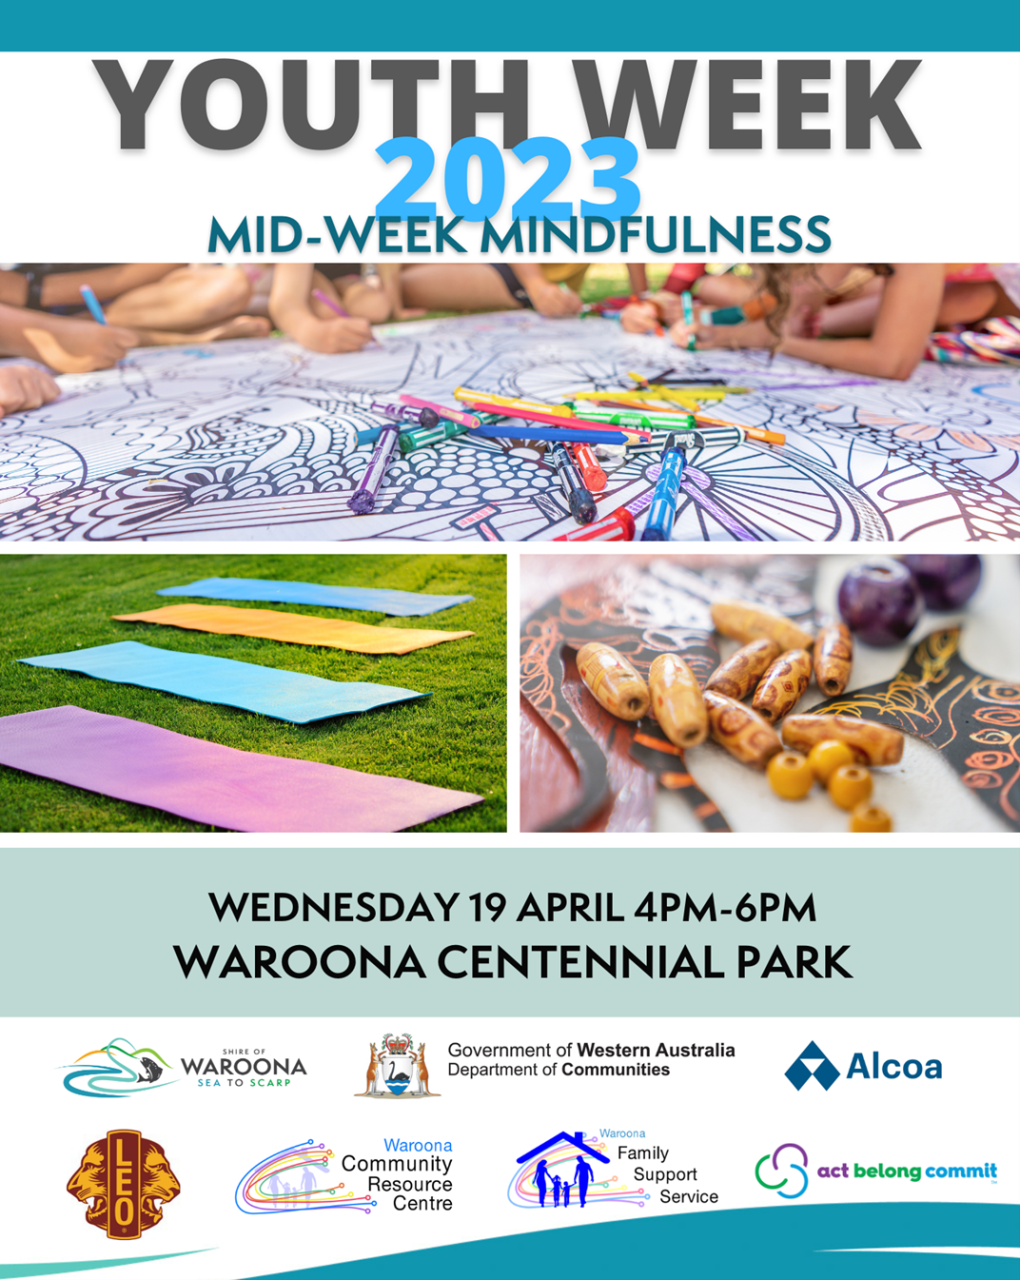 Youth Week 2023 - Mid-week Mindfulness